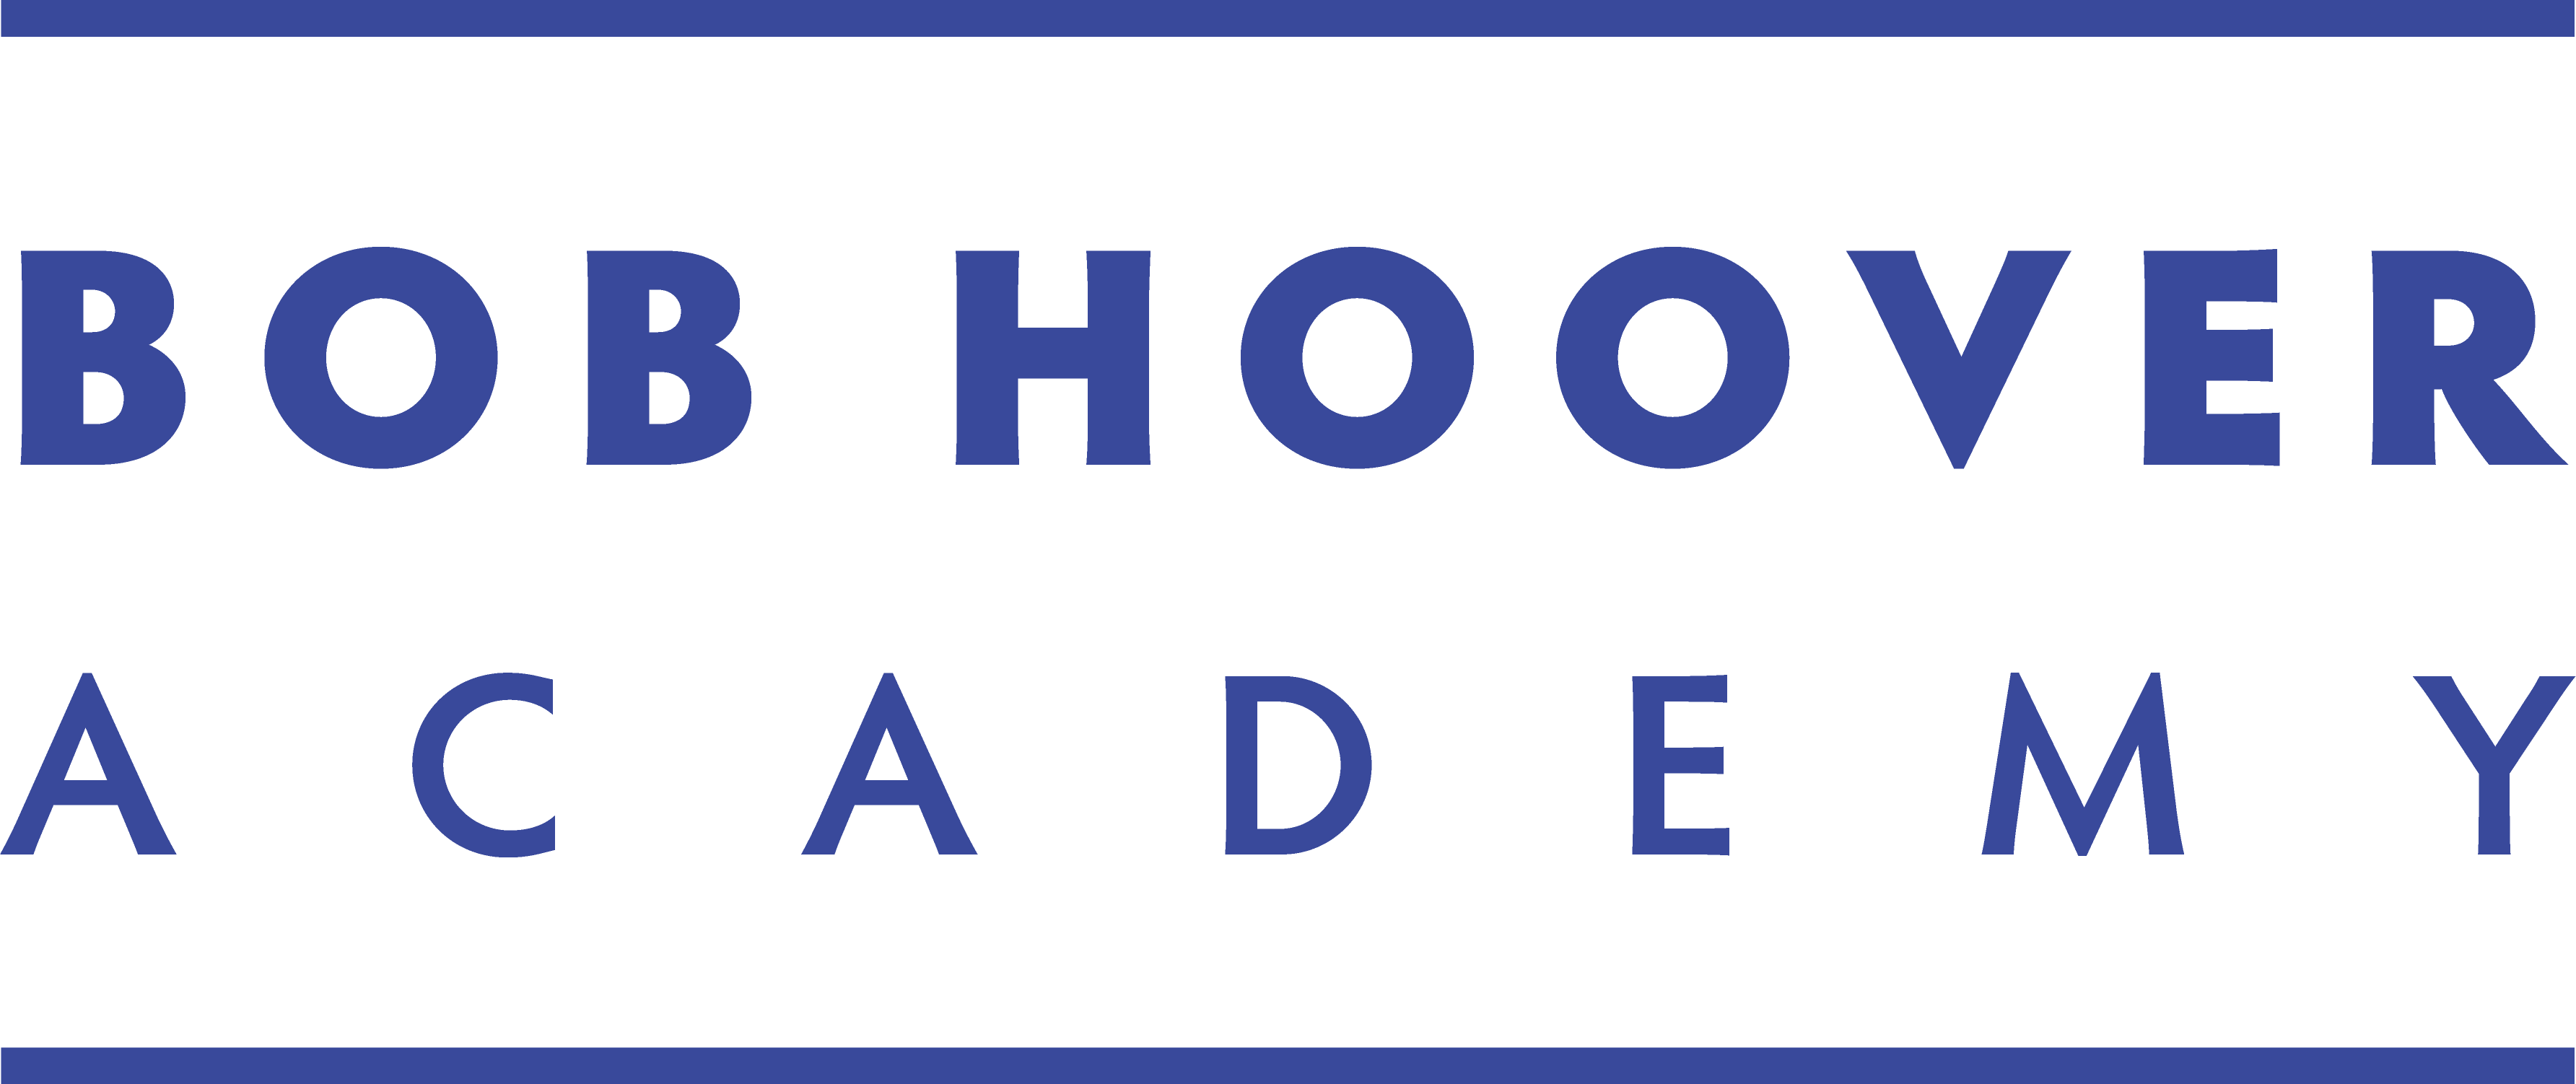 Bob Hoover Academy logo